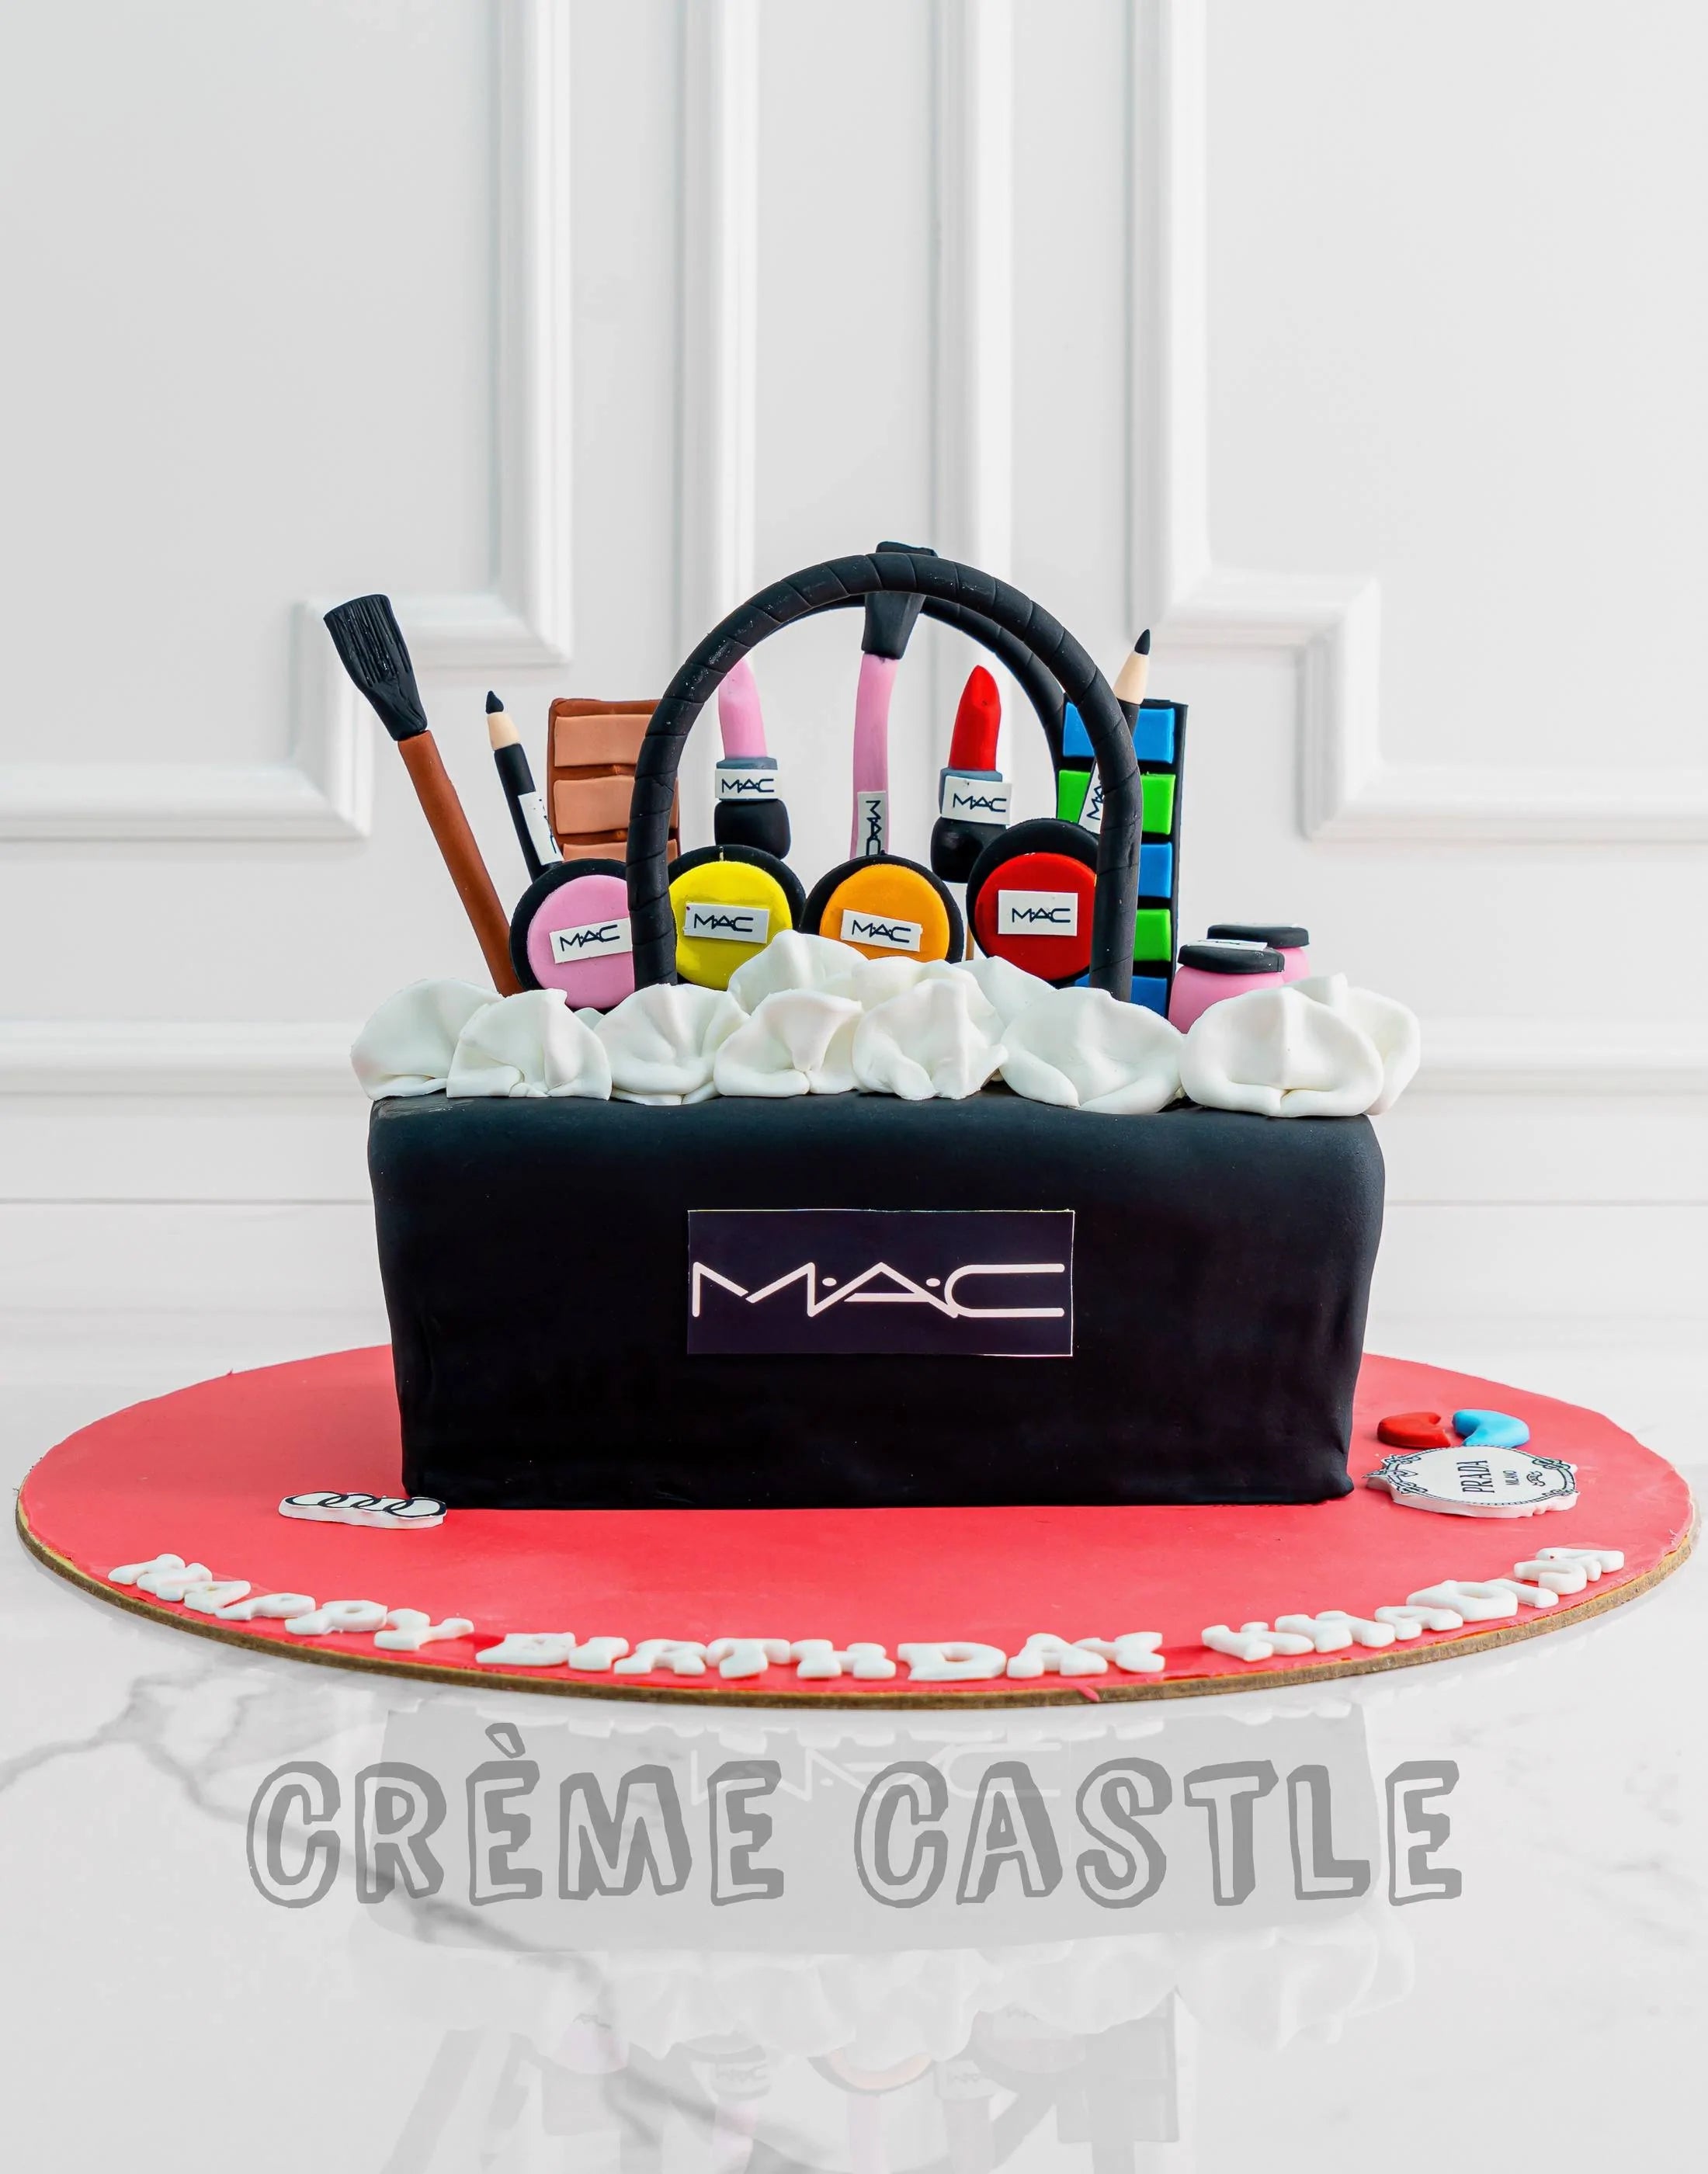 Cake Time - Barbie Purse Cake 💗💜 #cake #baking #homemade #caketimebg  #fondant #buttercream #birthday #happybirthday #birthdaycake #makeup  #glitter #polkadots #rings #bow #purse #lipstick #blush #eyeshadow |  Facebook